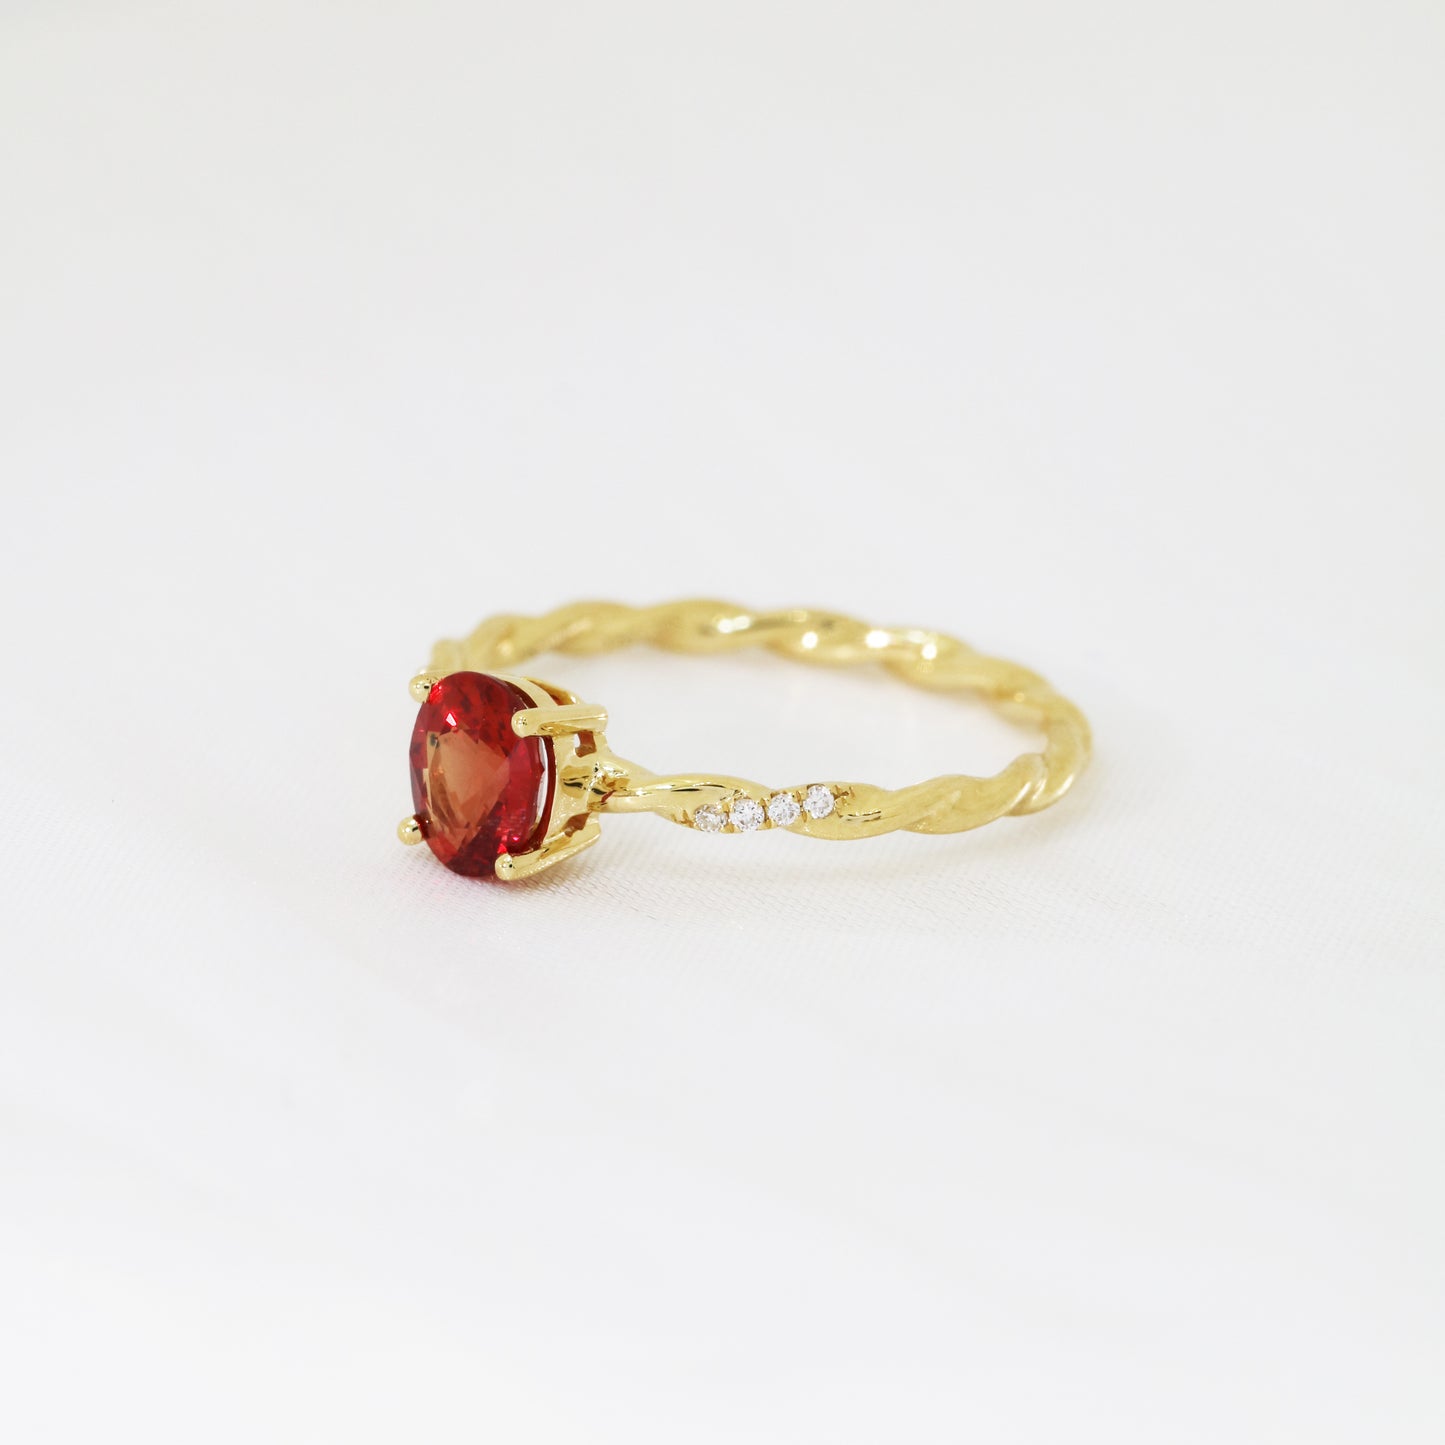 18k玫瑰金鑽石戒指側面 18k Rose Gold Twisted Orangey Red Sapphire Diamond Ring on side view